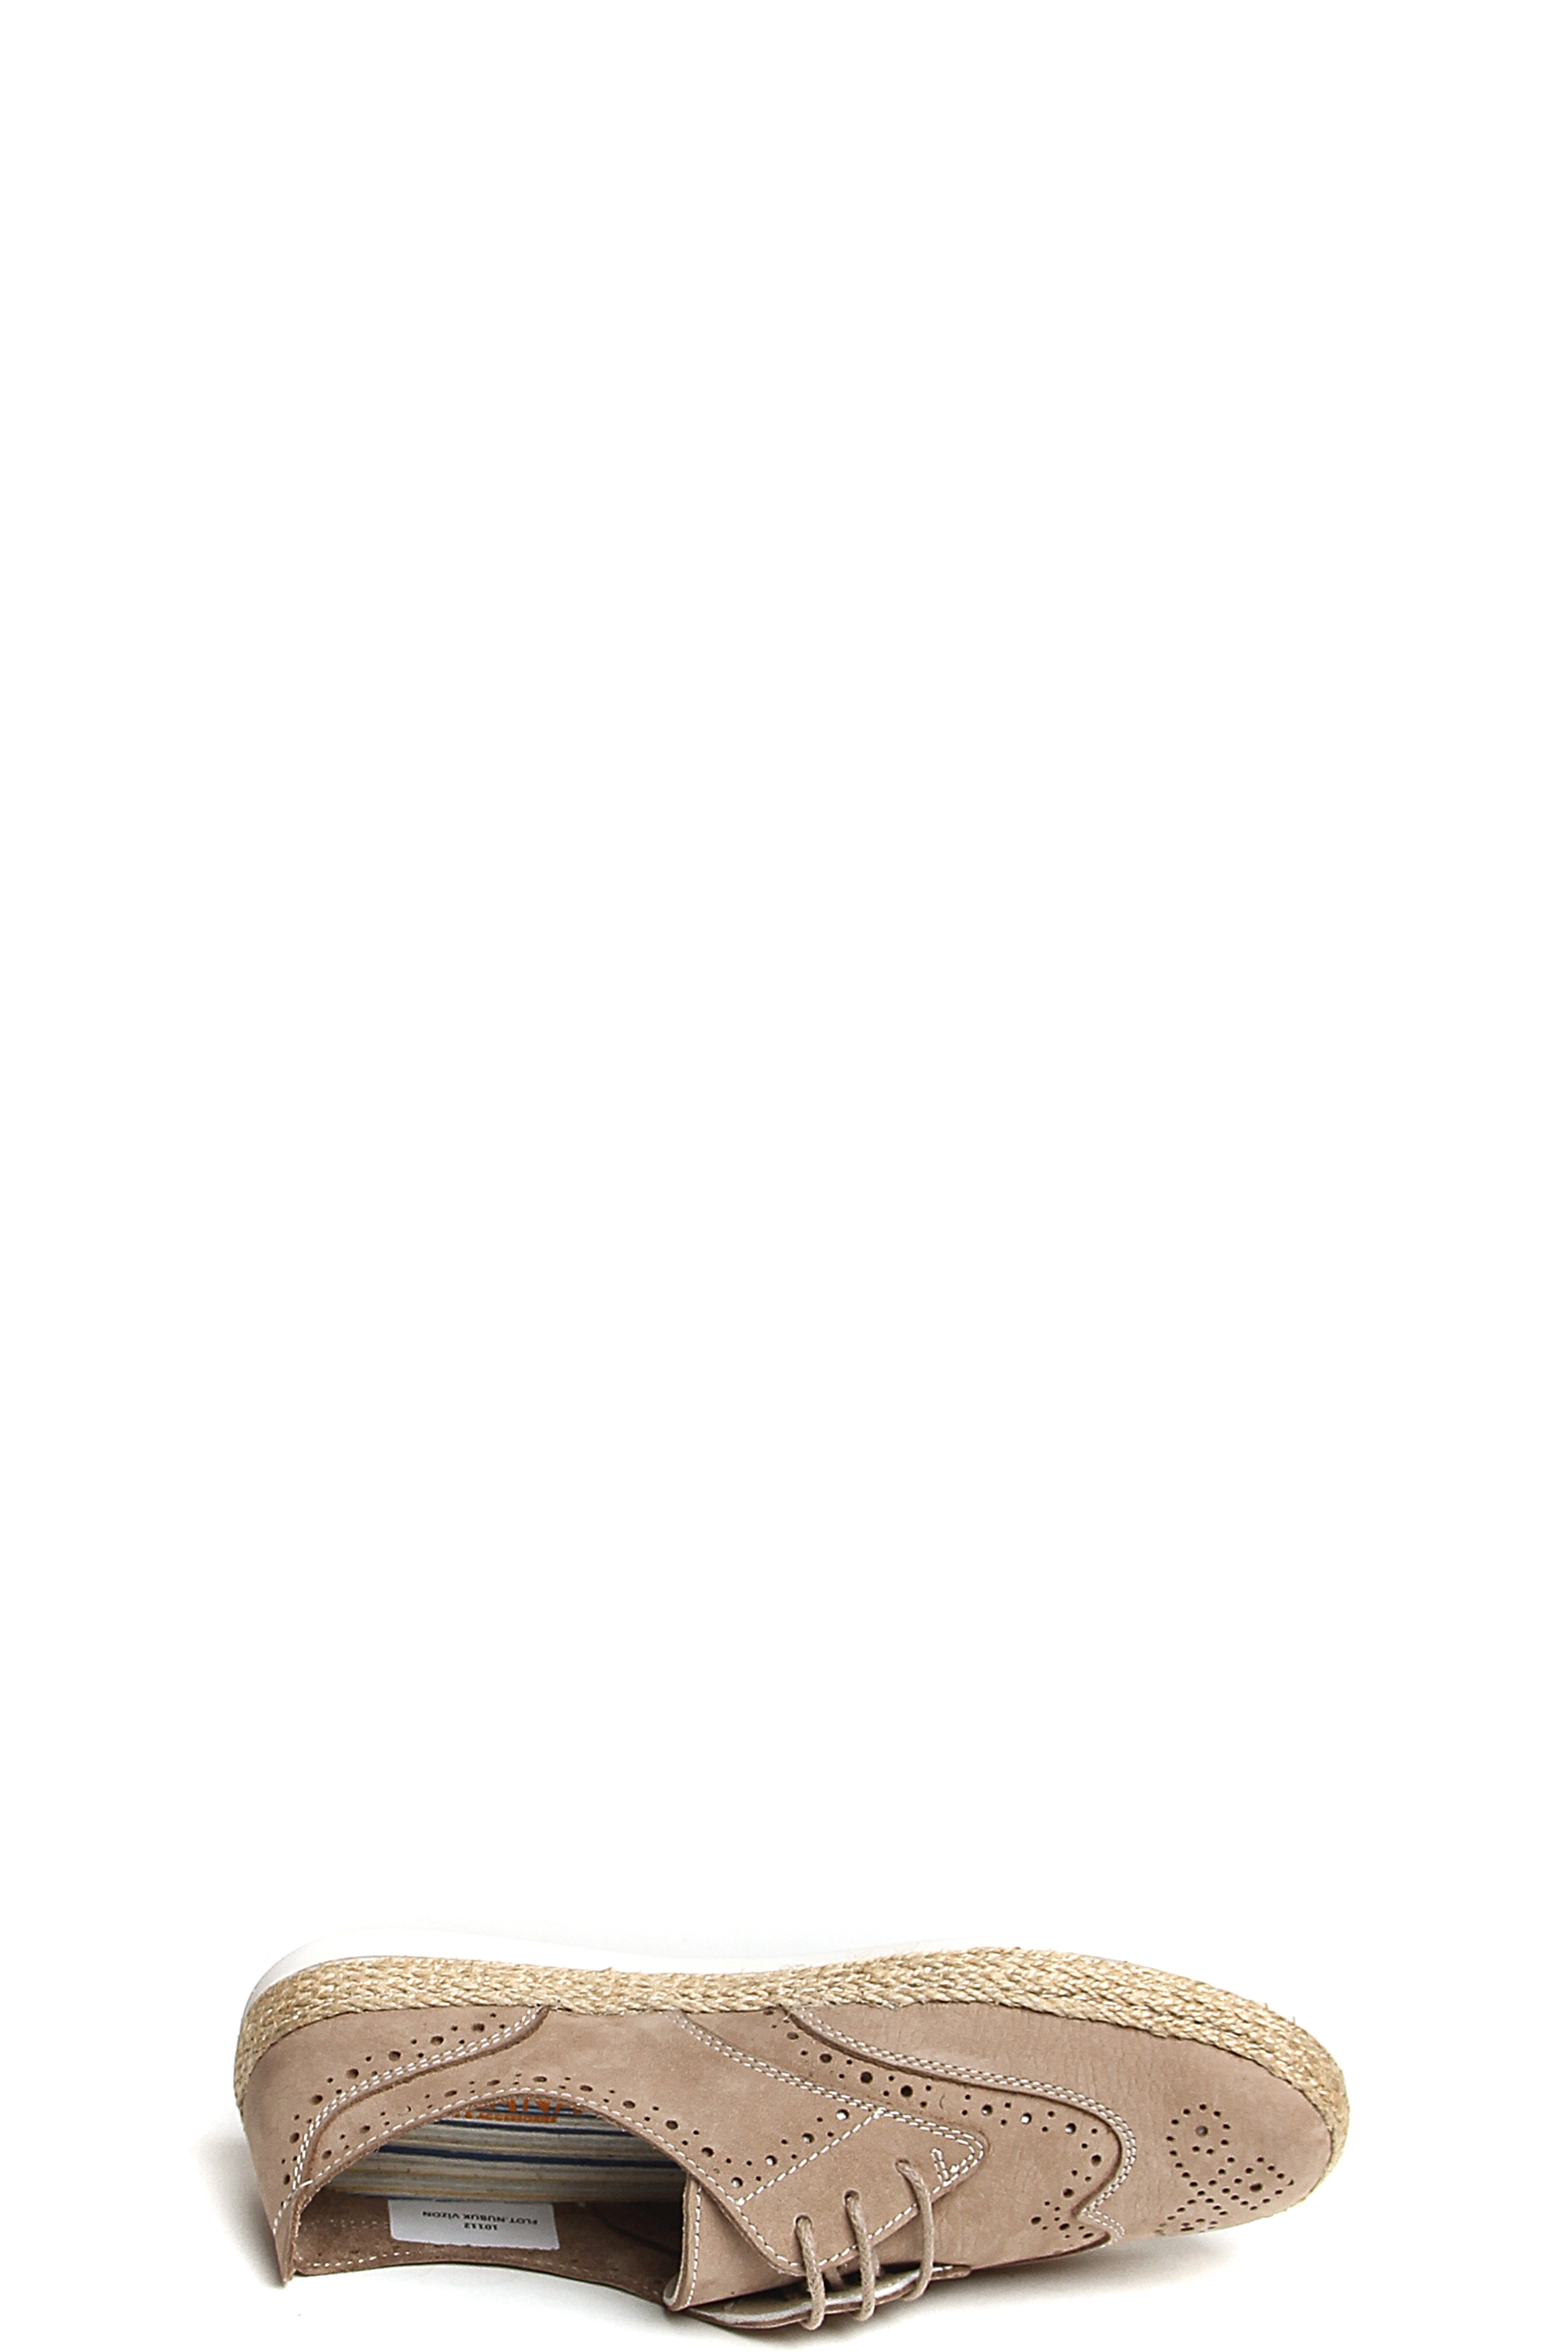 181570-3-8211 полуботинки   жен. летн. натуральная кожа (нубук)/без подкладки/термоэластопласт бежев